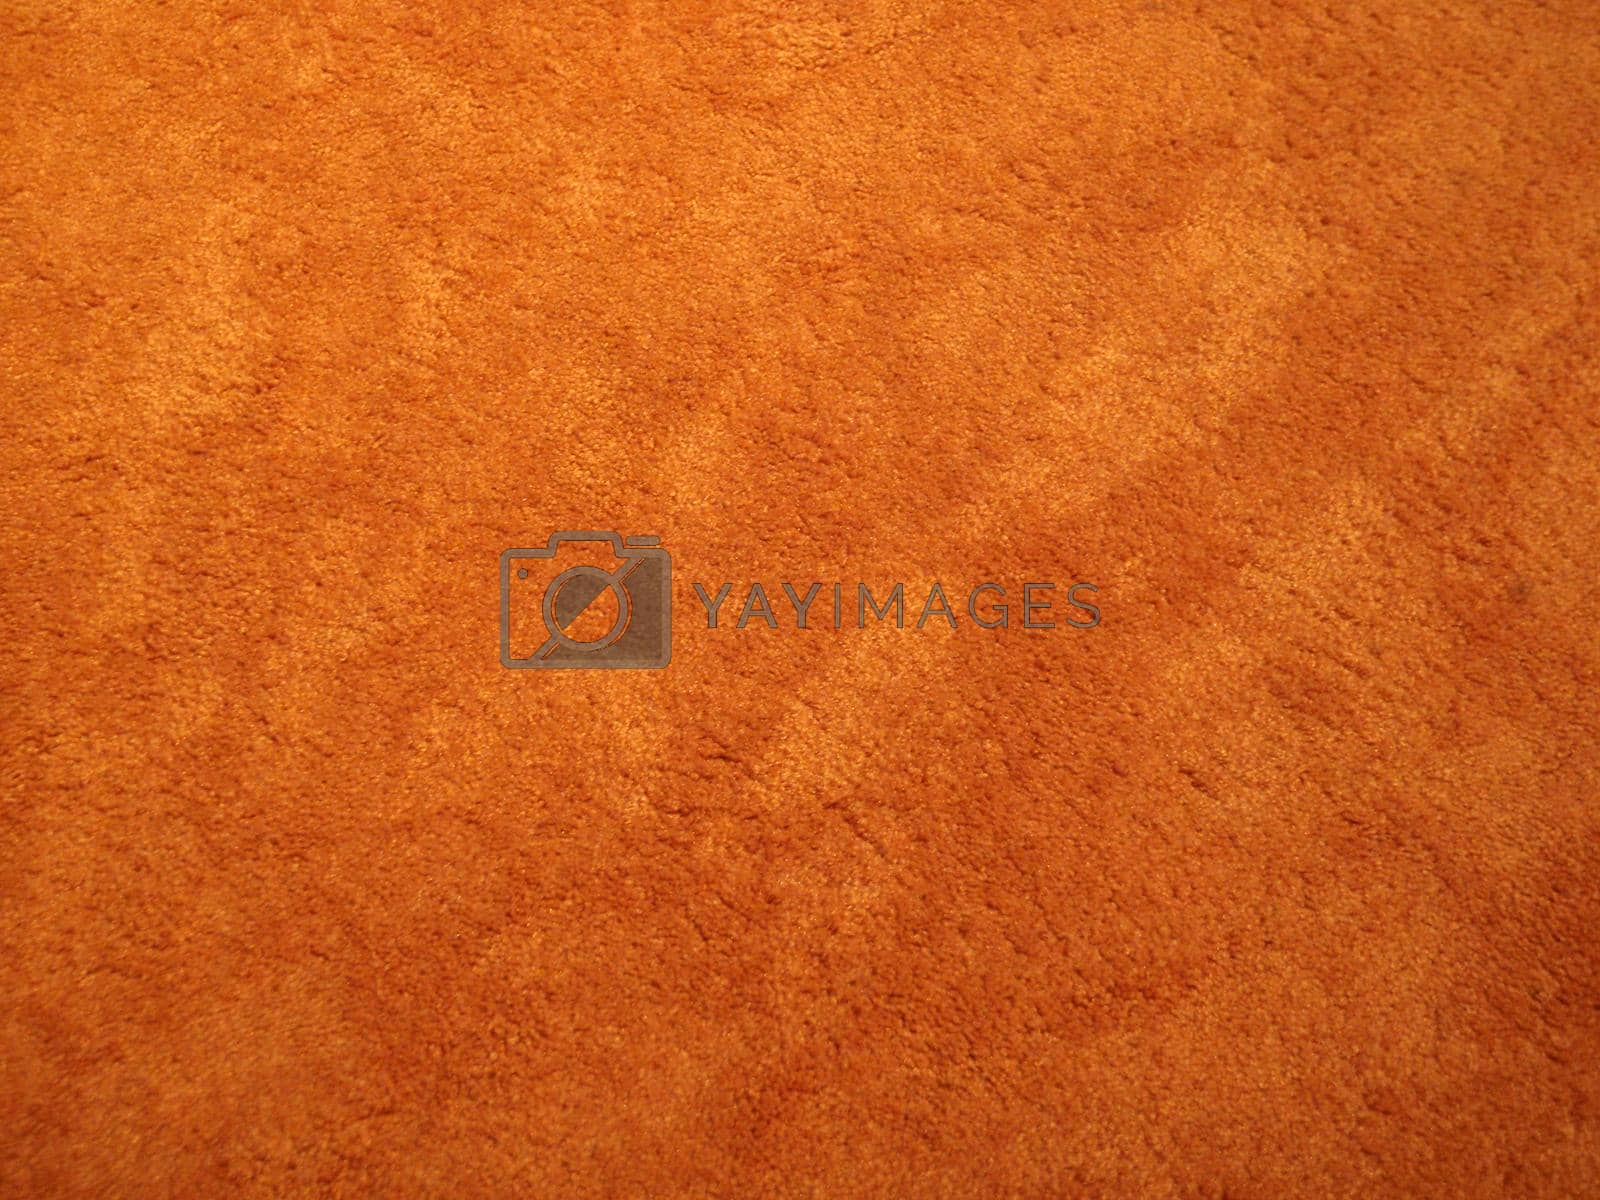 Royalty free image of close up of Orange Shag Carpet by EricGBVD